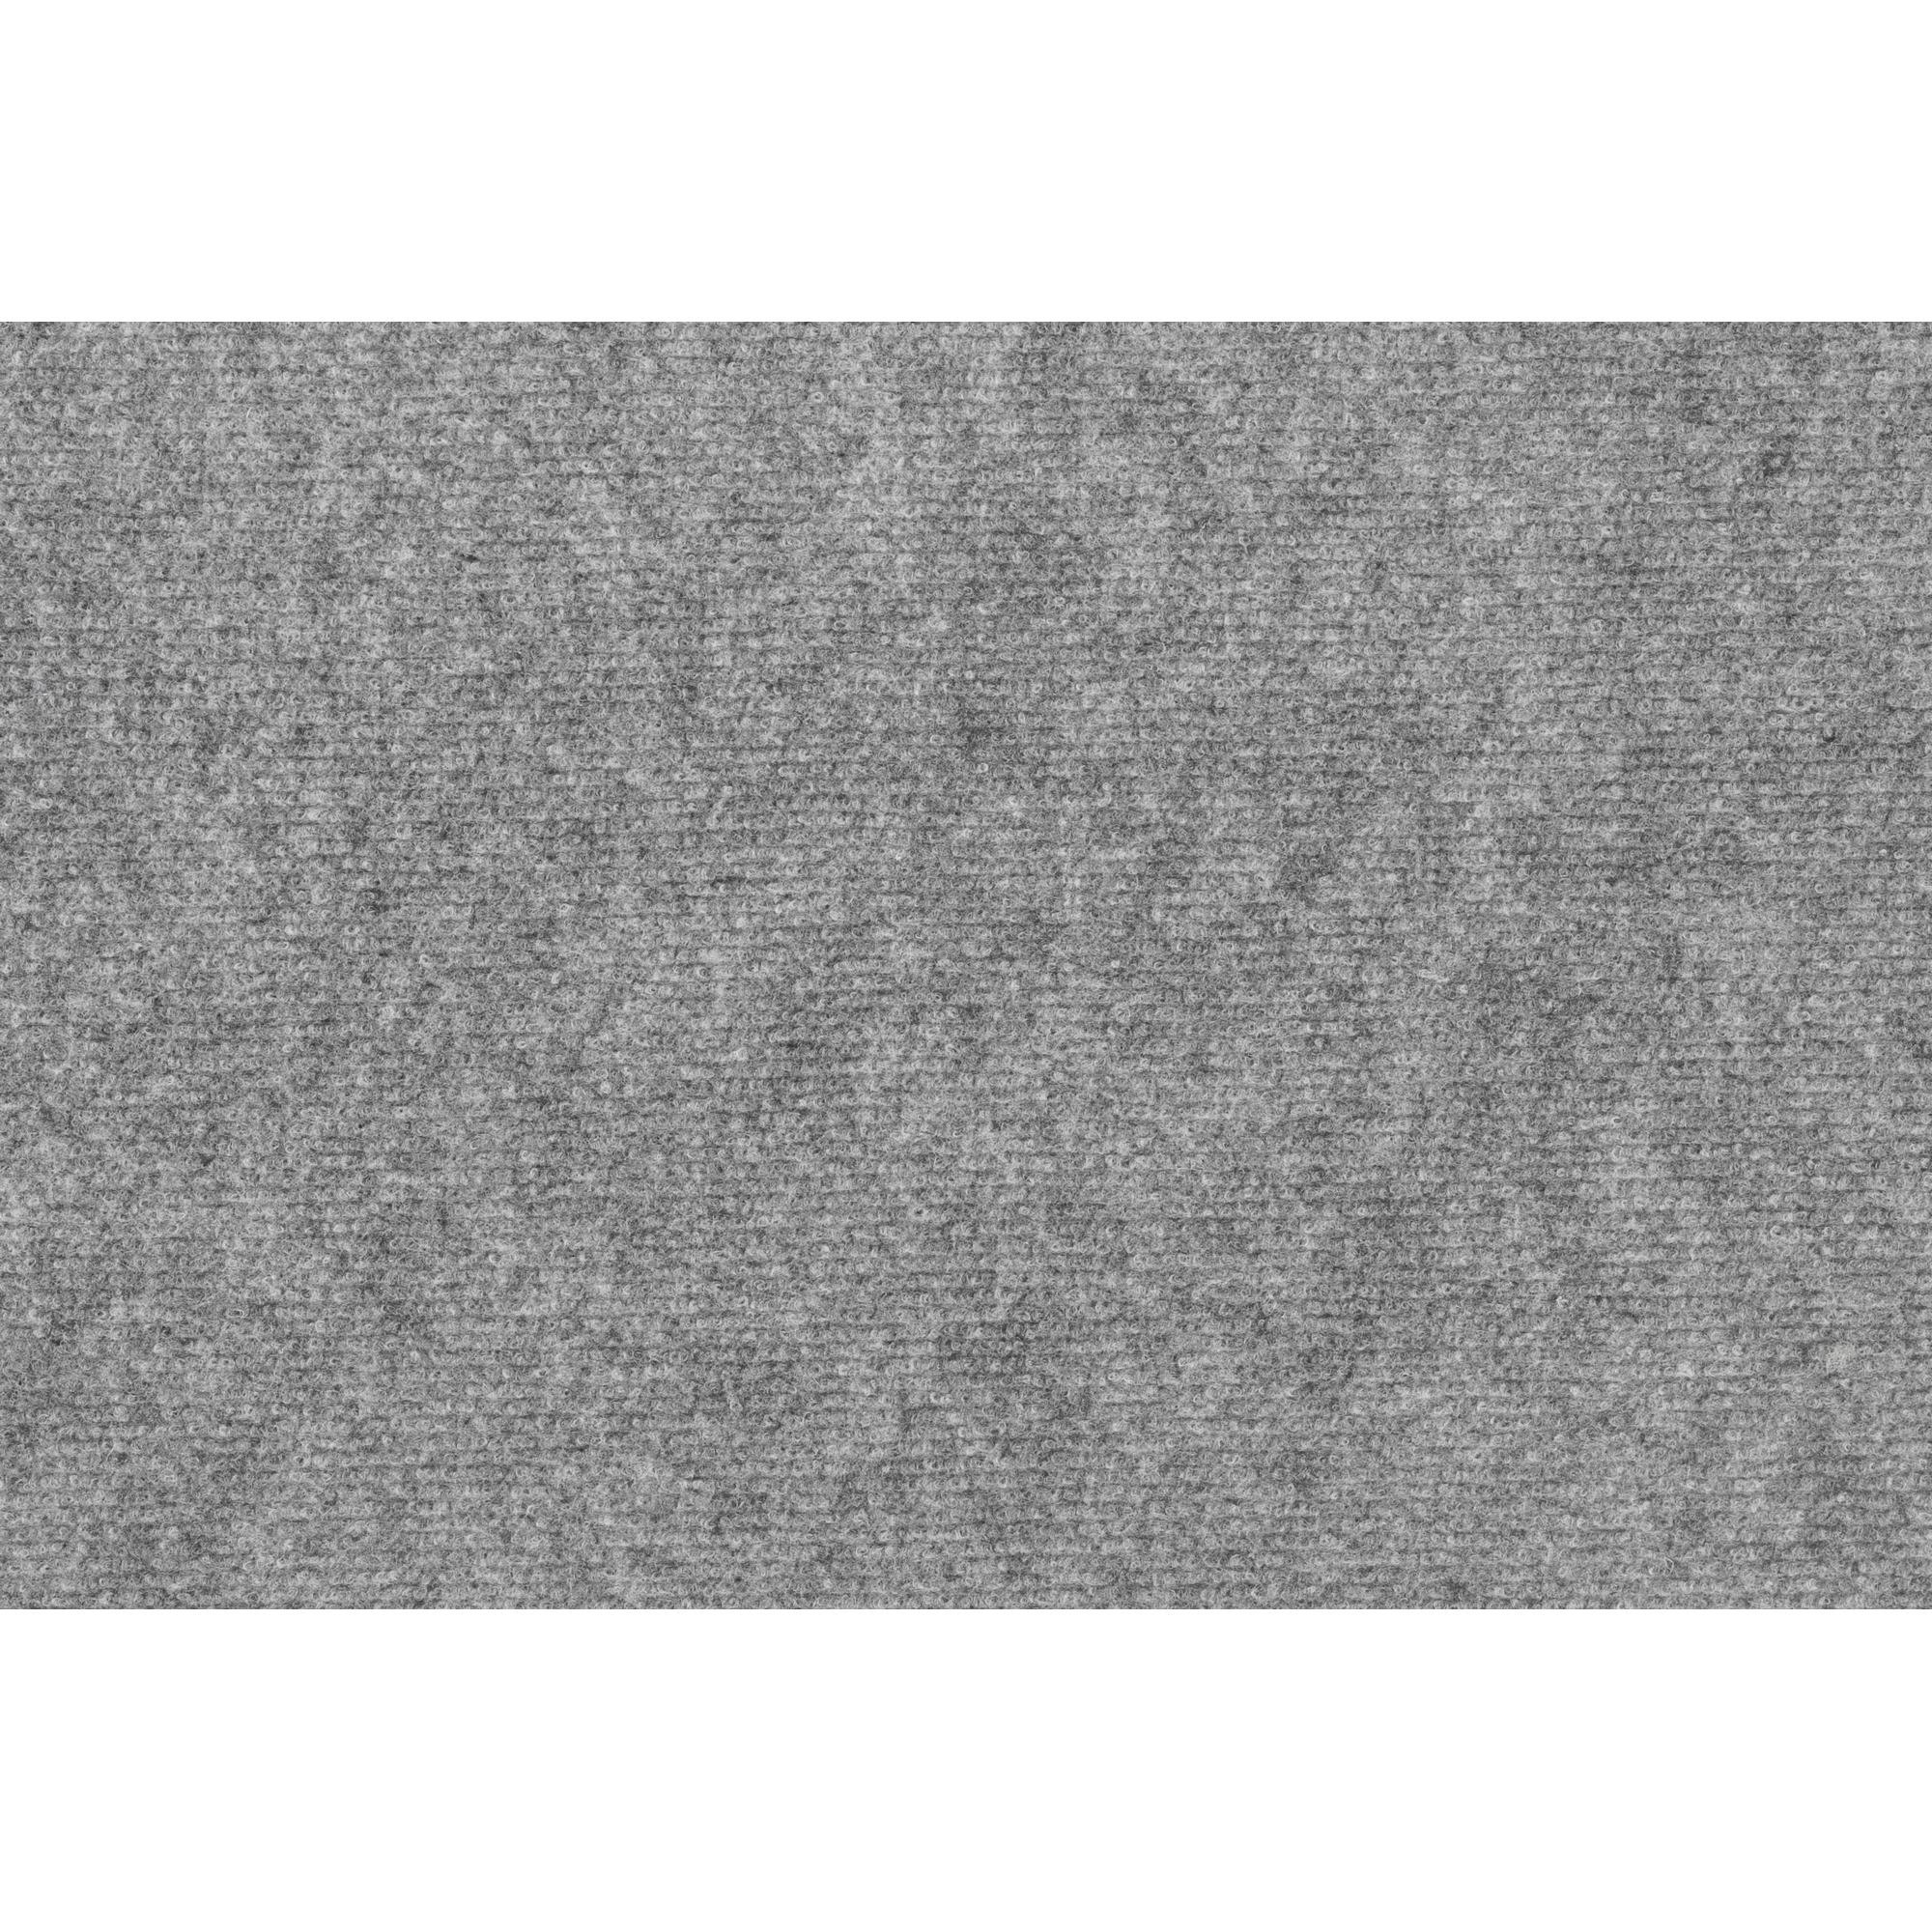 Reinkemeier Nadelfilz-Teppich "Malta" Grau, 4 m + product picture